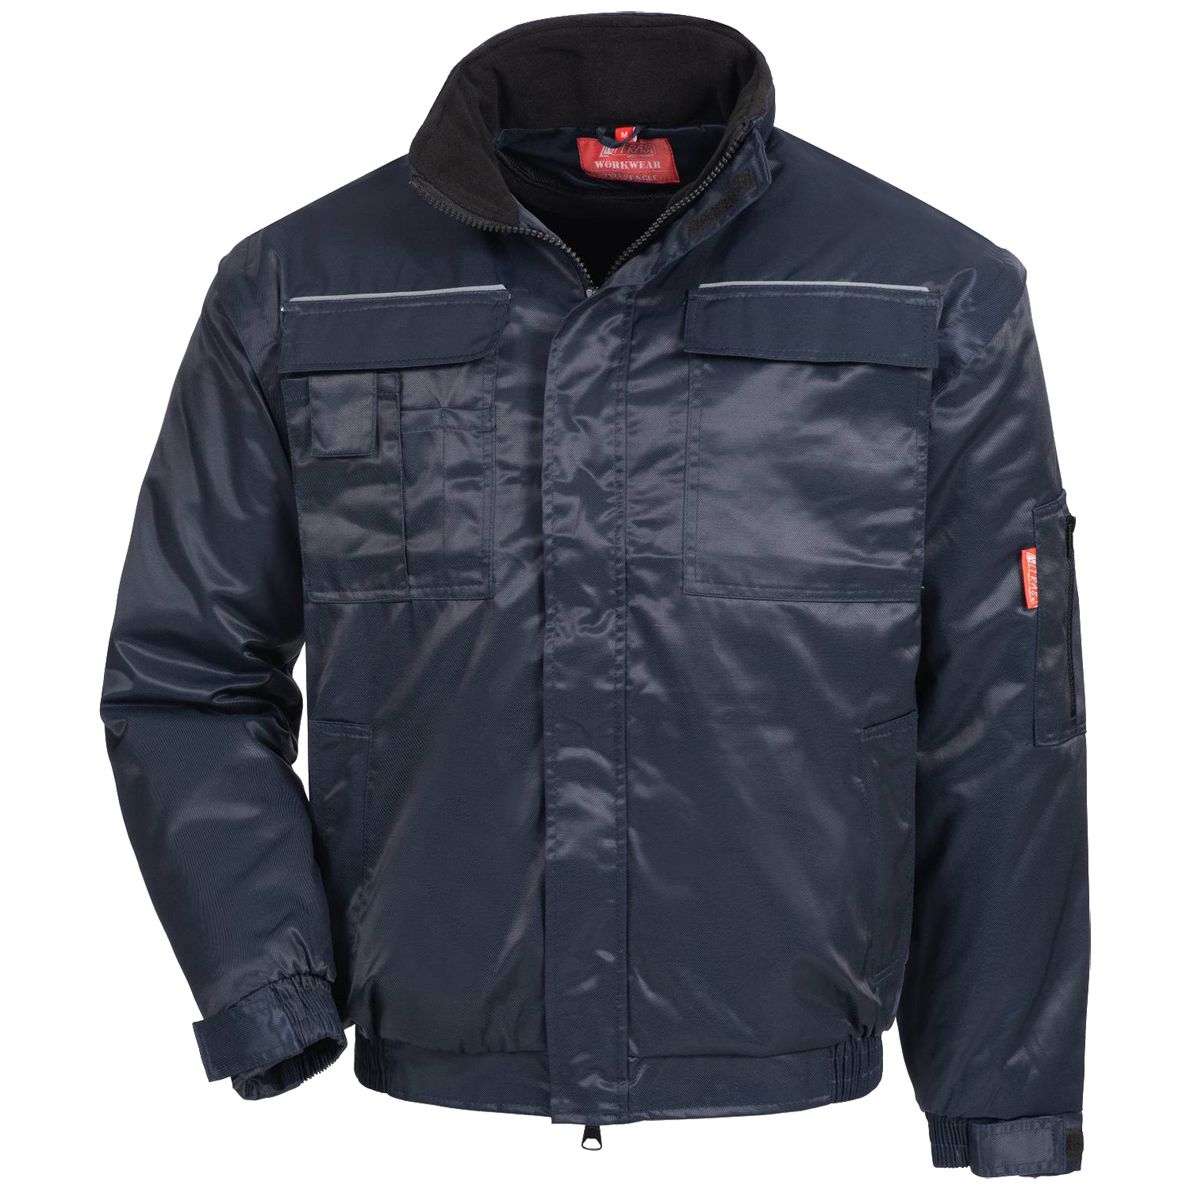 NITRAS MOTION TEX PLUS 7121 weather jacket - windproof jacket for work - dark blue - S